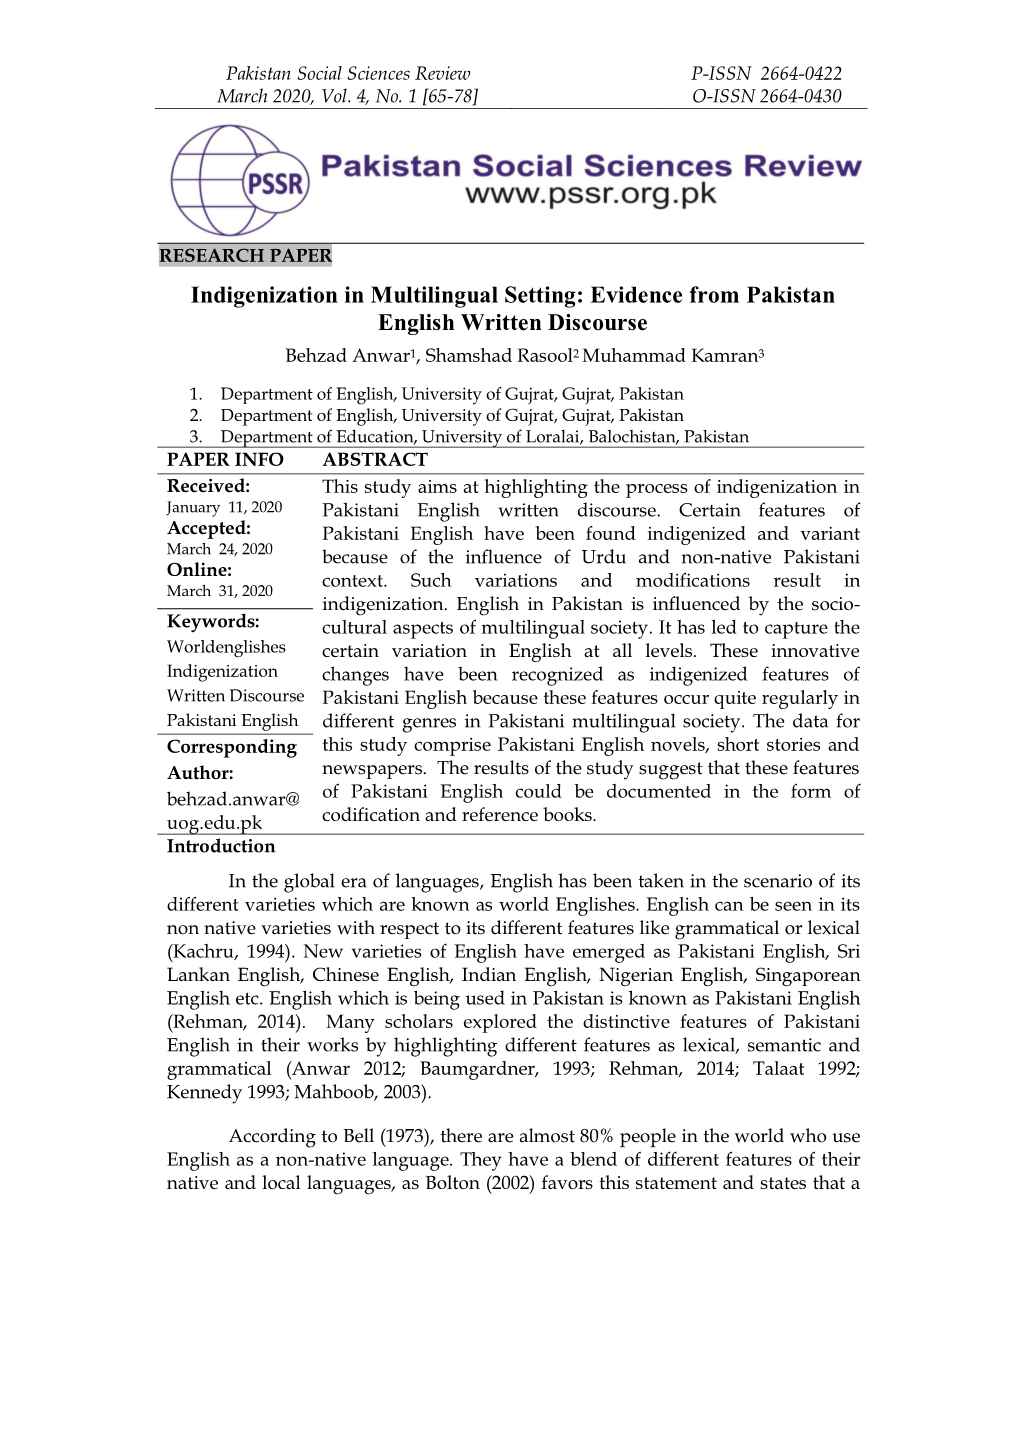 Indigenization in Multilingual Setting: Evidence from Pakistan English Written Discourse